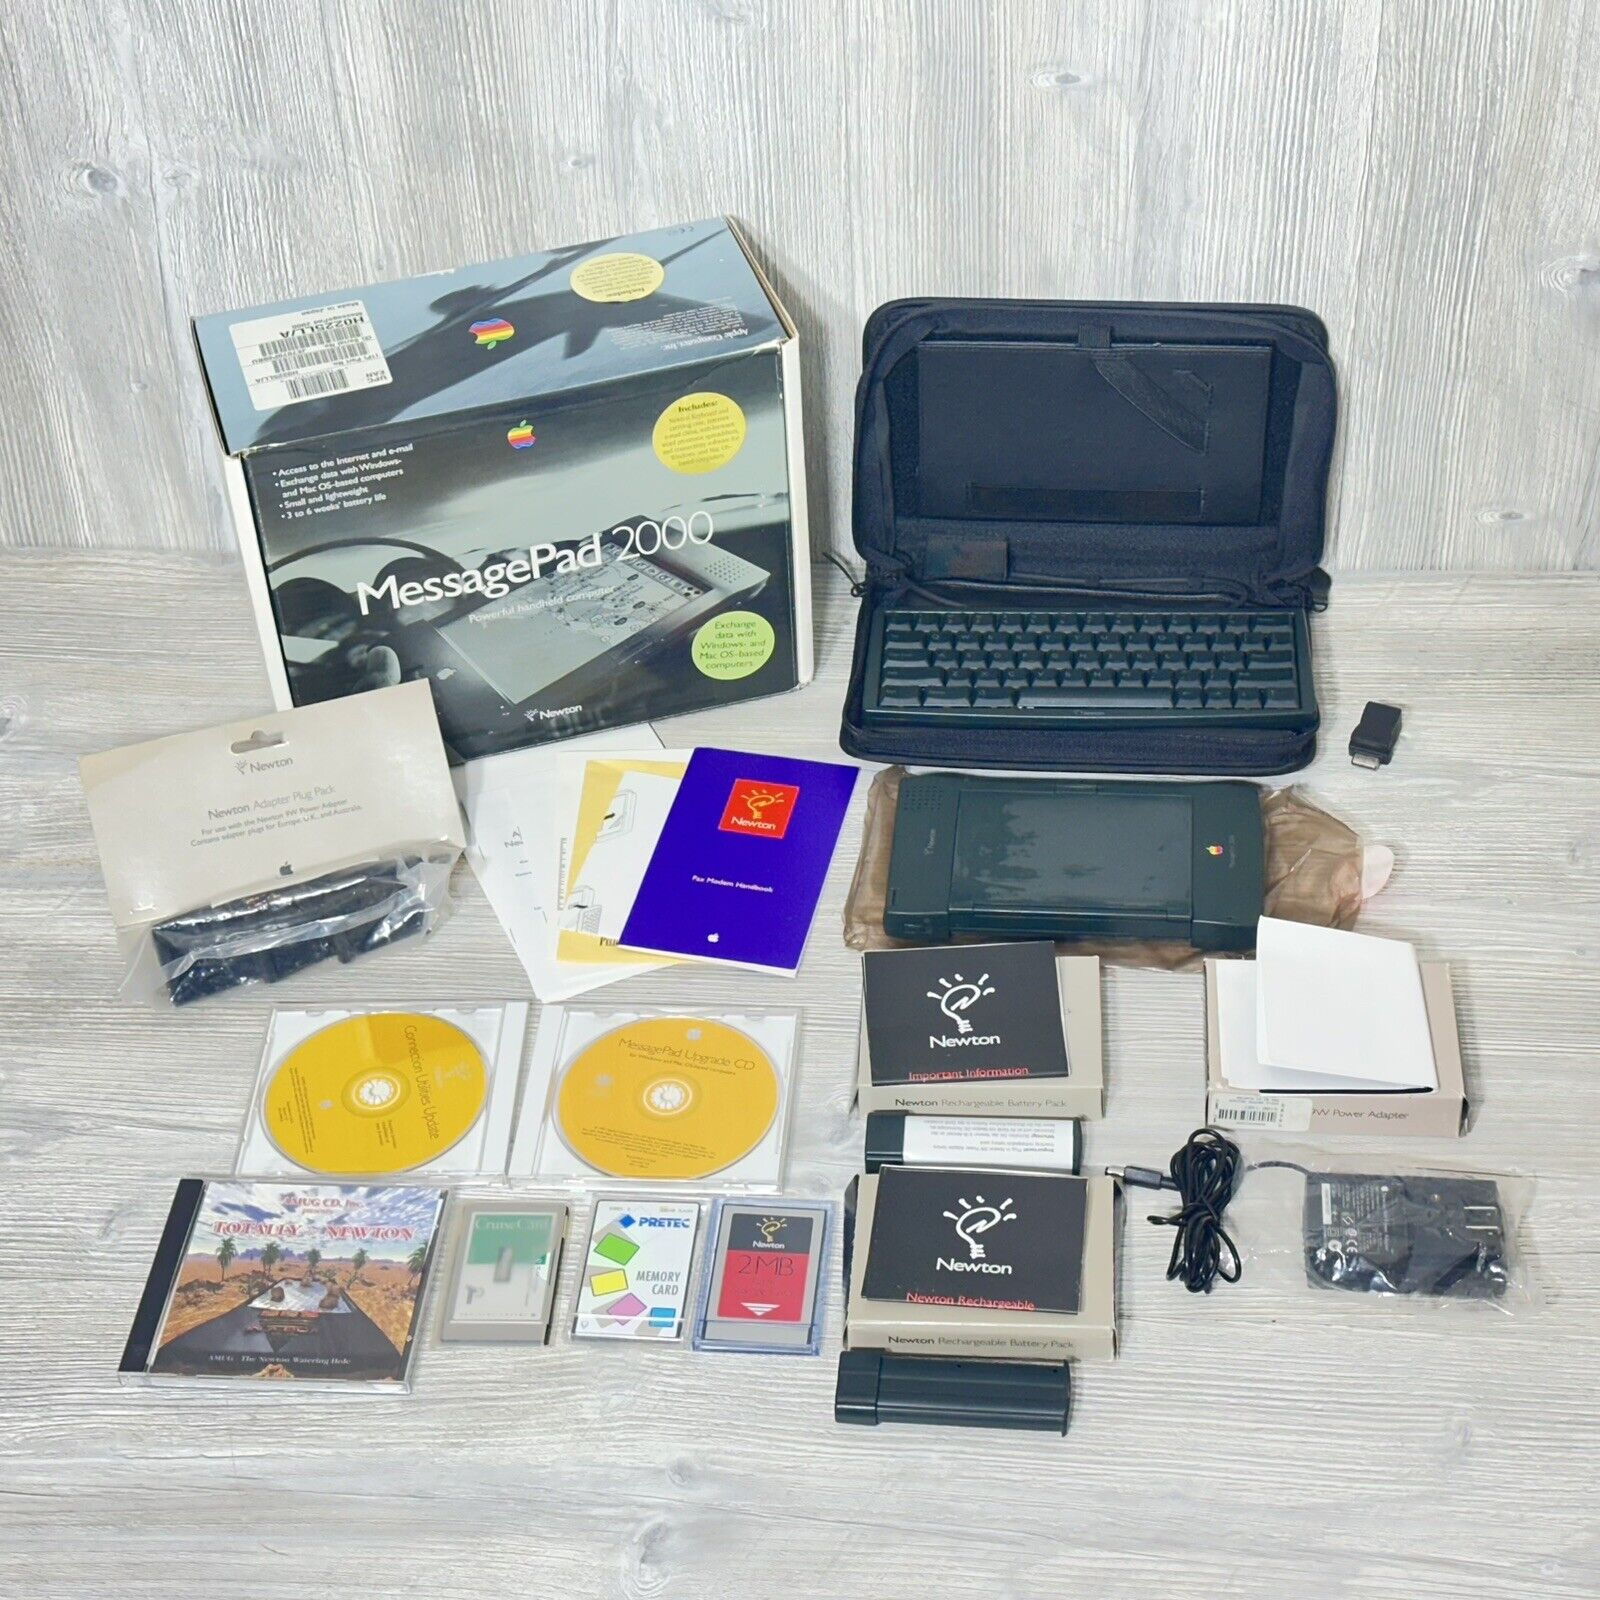 Vintage Apple Newton Messagepad 2000 w/ Original Box and Accessories WORKS